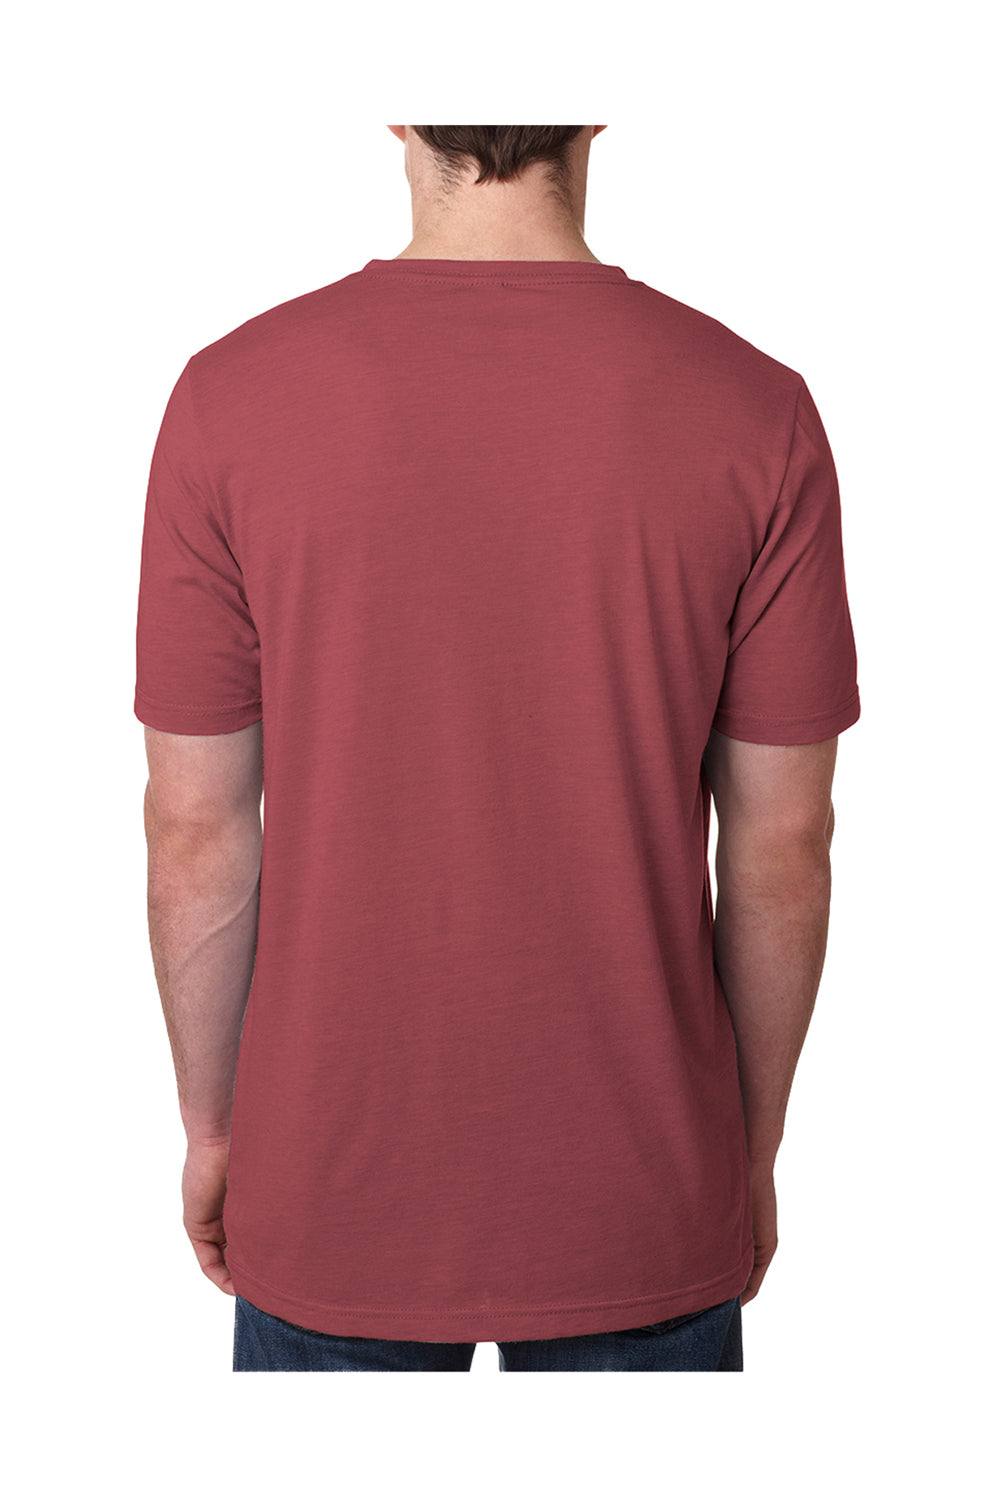 Next Level 6200 Mens Jersey Short Sleeve Crewneck T-Shirt Paprika Red Back